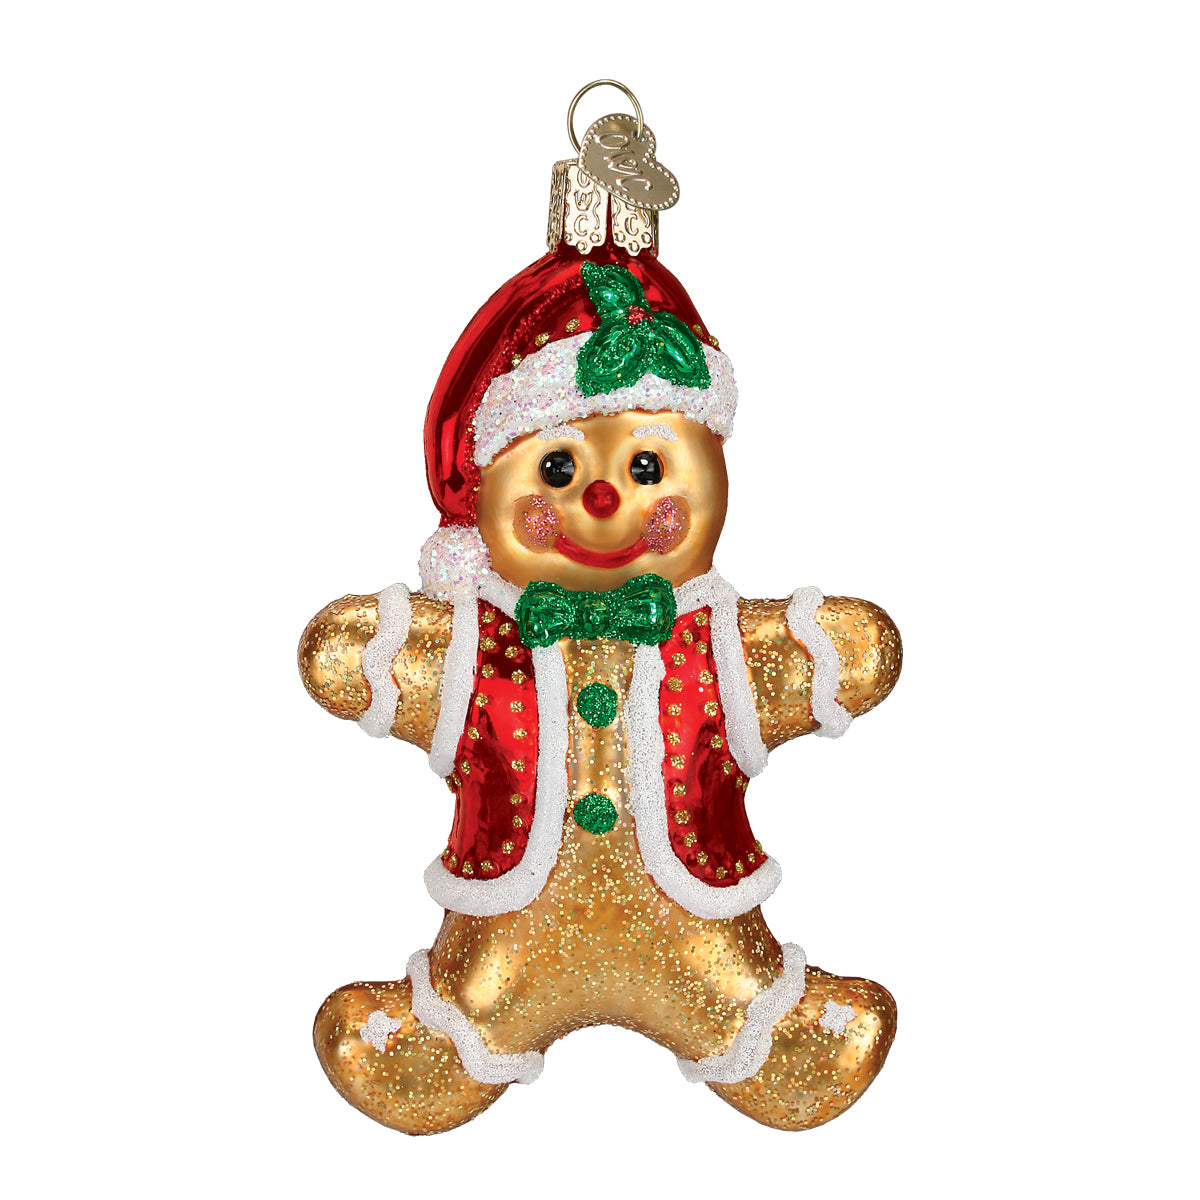 Old World Christmas Gingerbread Boy Ornament    